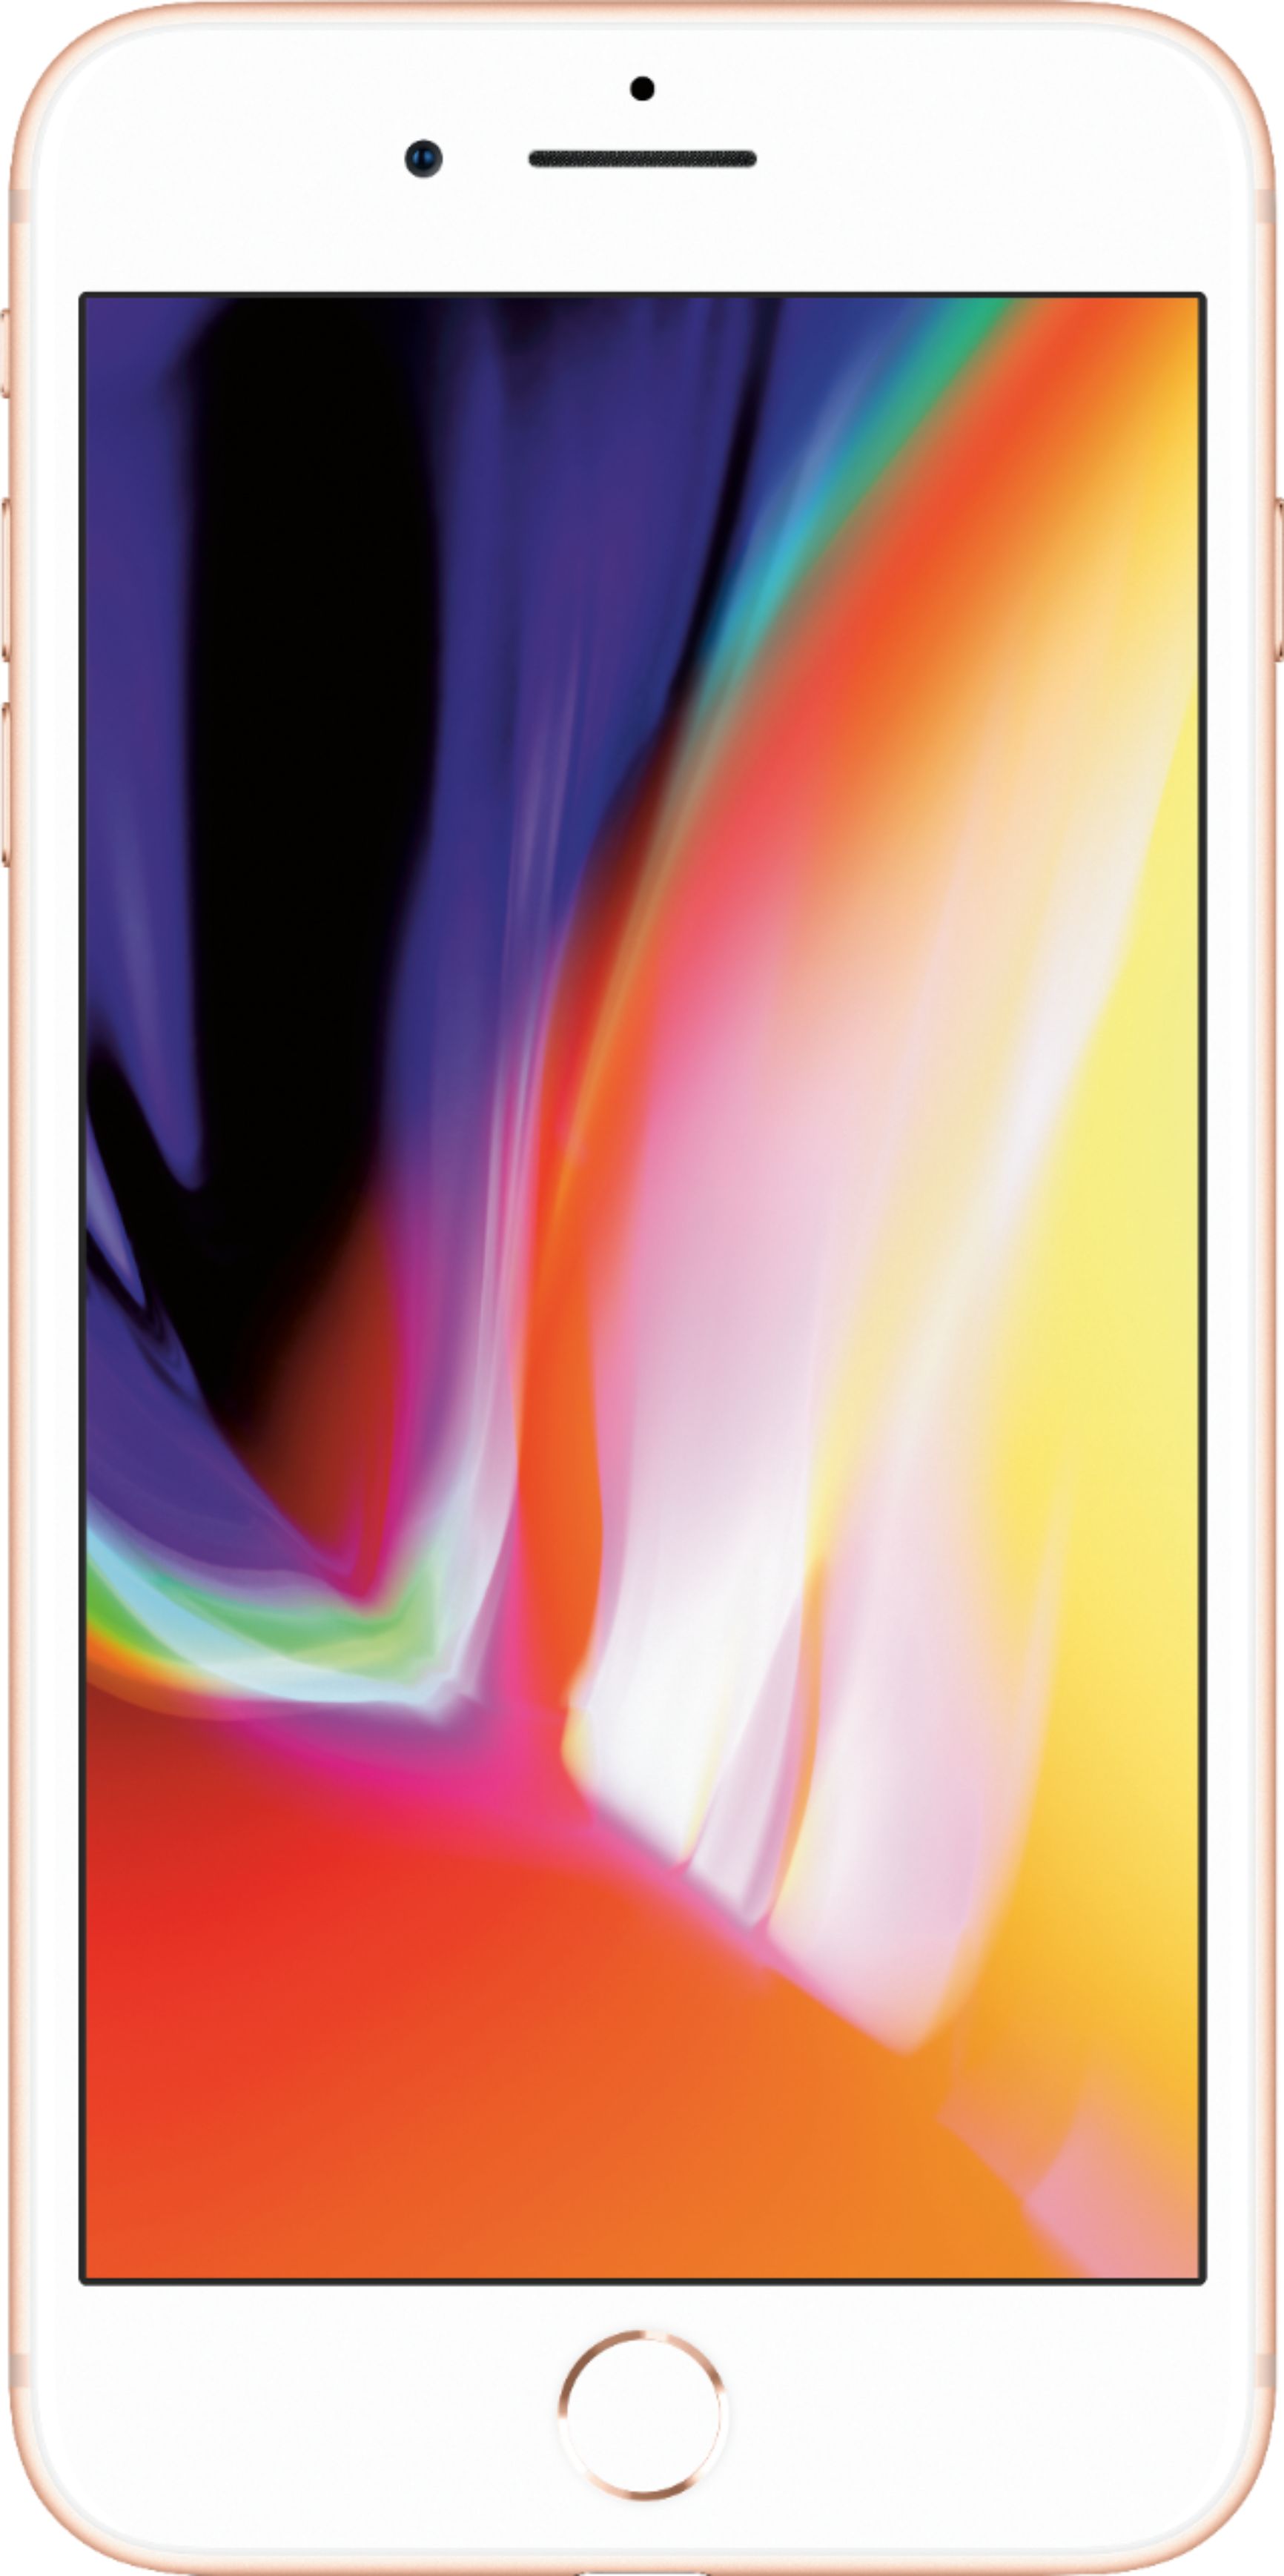 Apple - iPhone 8 Plus 128GB - Gold (Verizon)